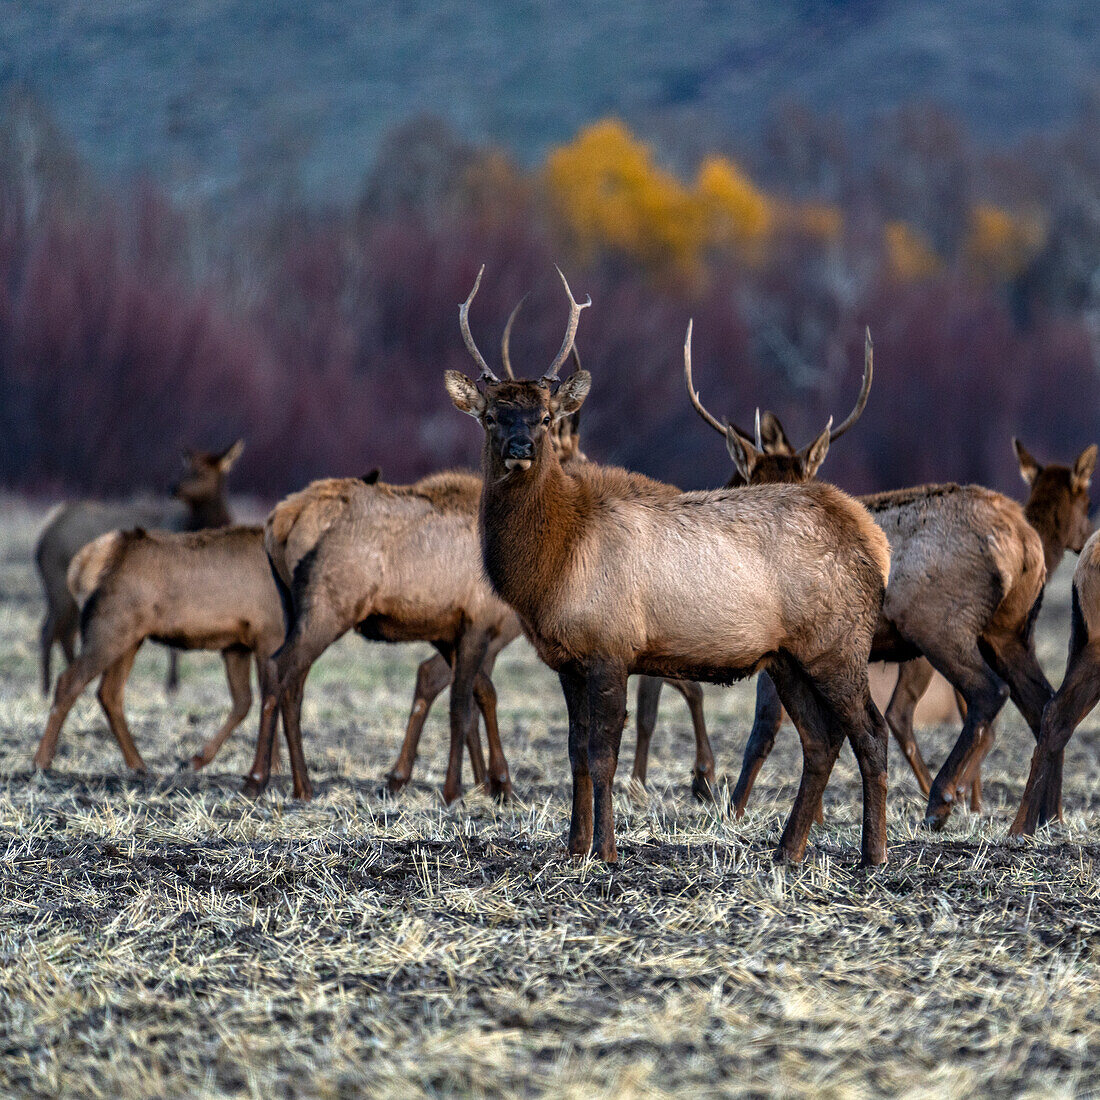 USA, Idaho, Bellevue, Bull elk among elk herd